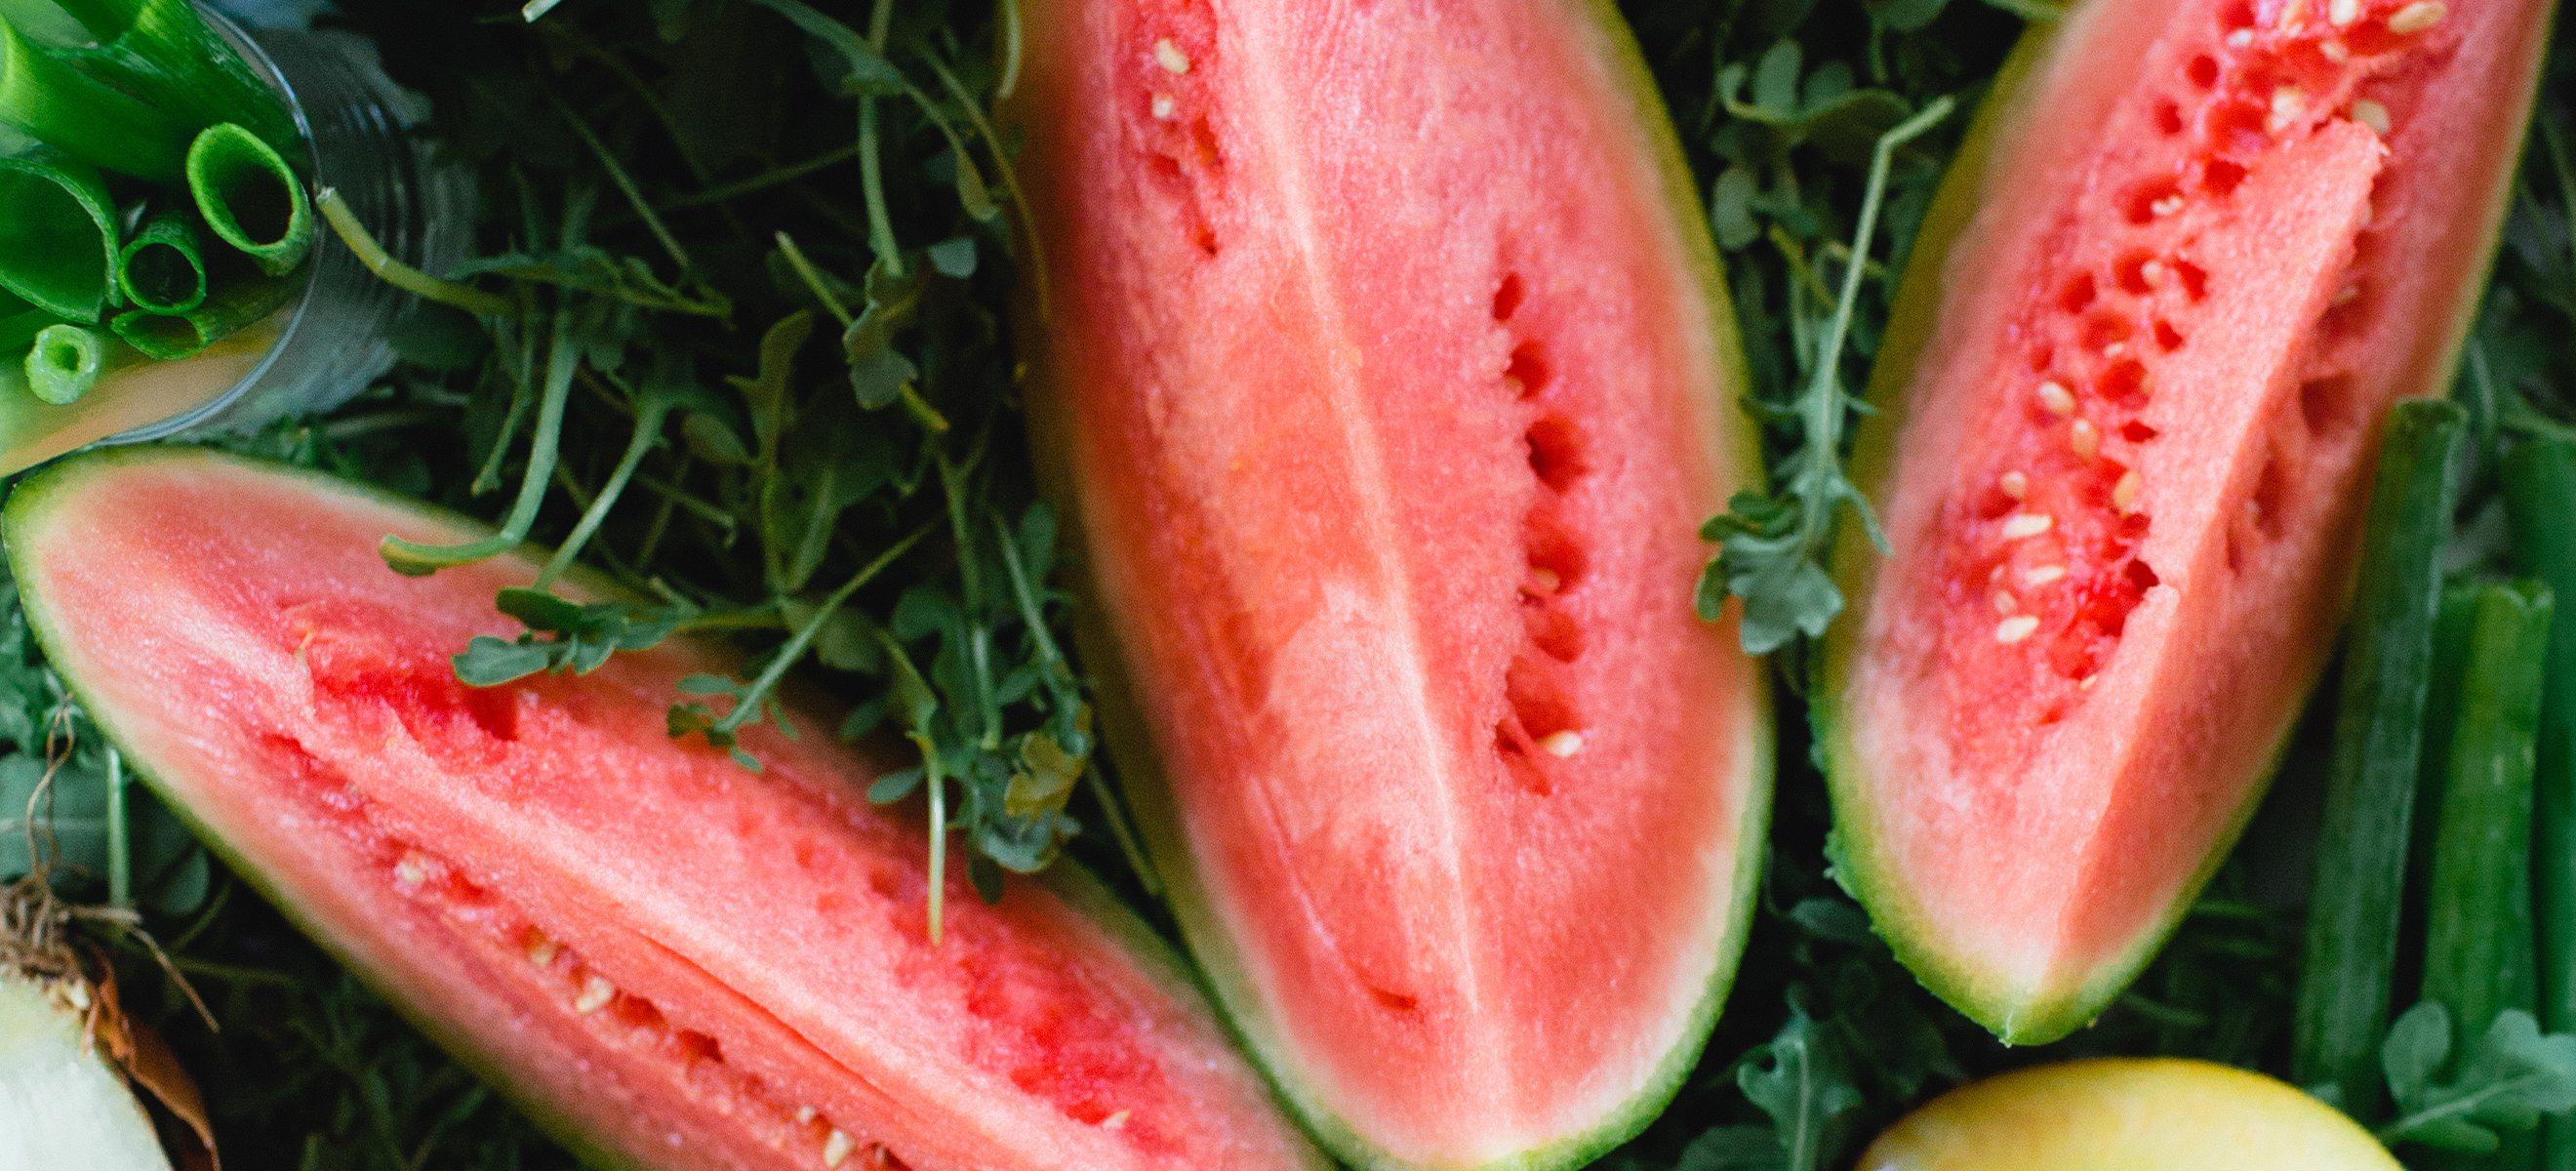 sliced ripe watermelon 